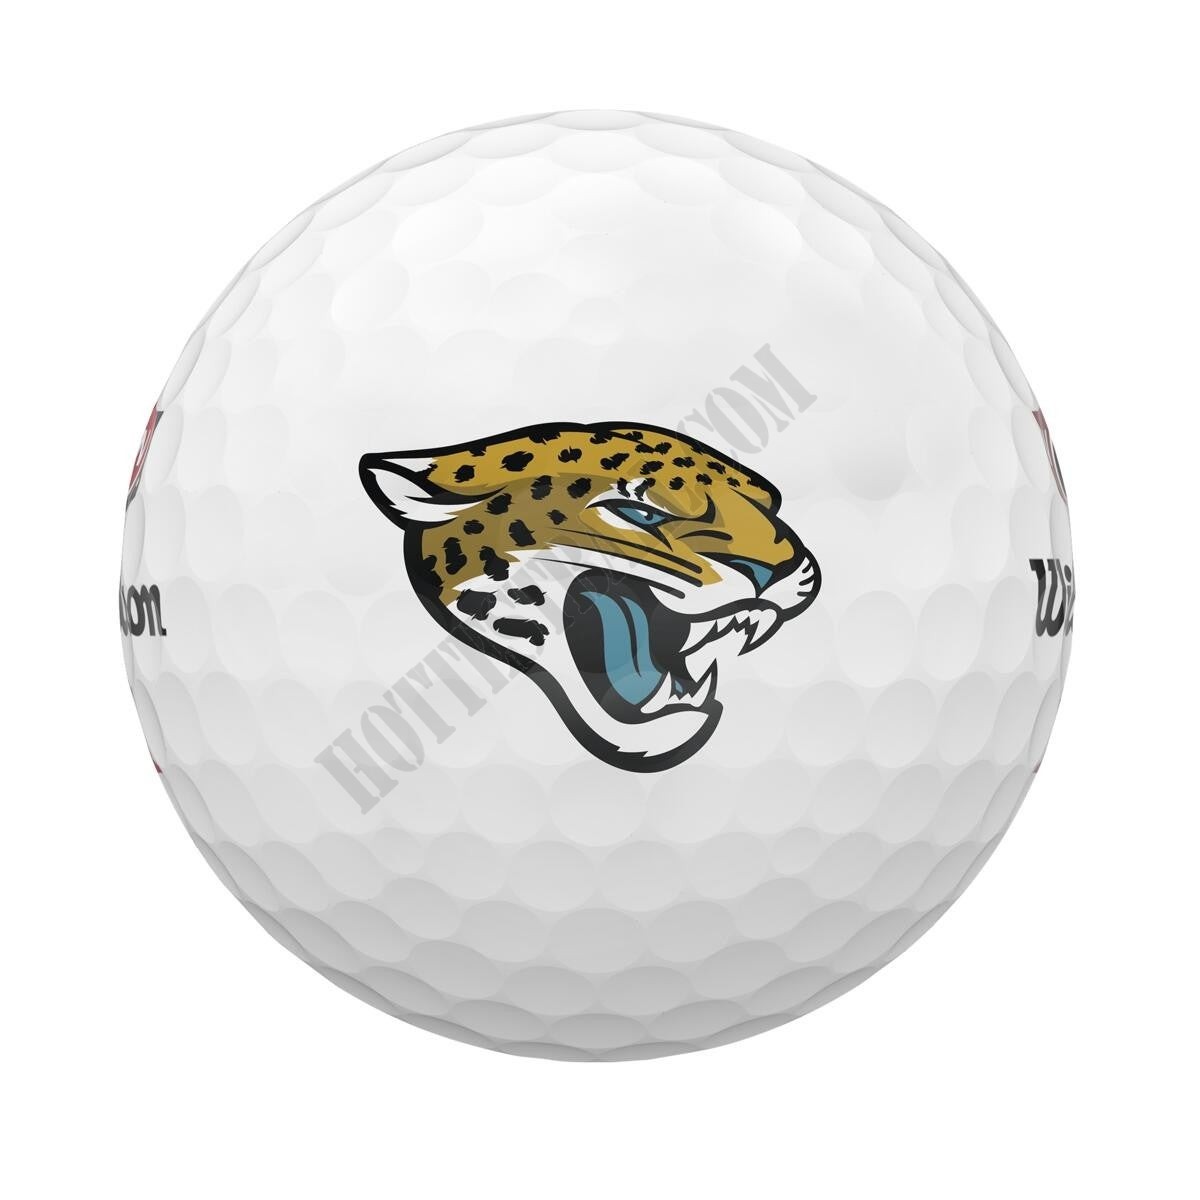 Duo Soft+ NFL Golf Balls - Jacksonville Jaguars ● Wilson Promotions - -1